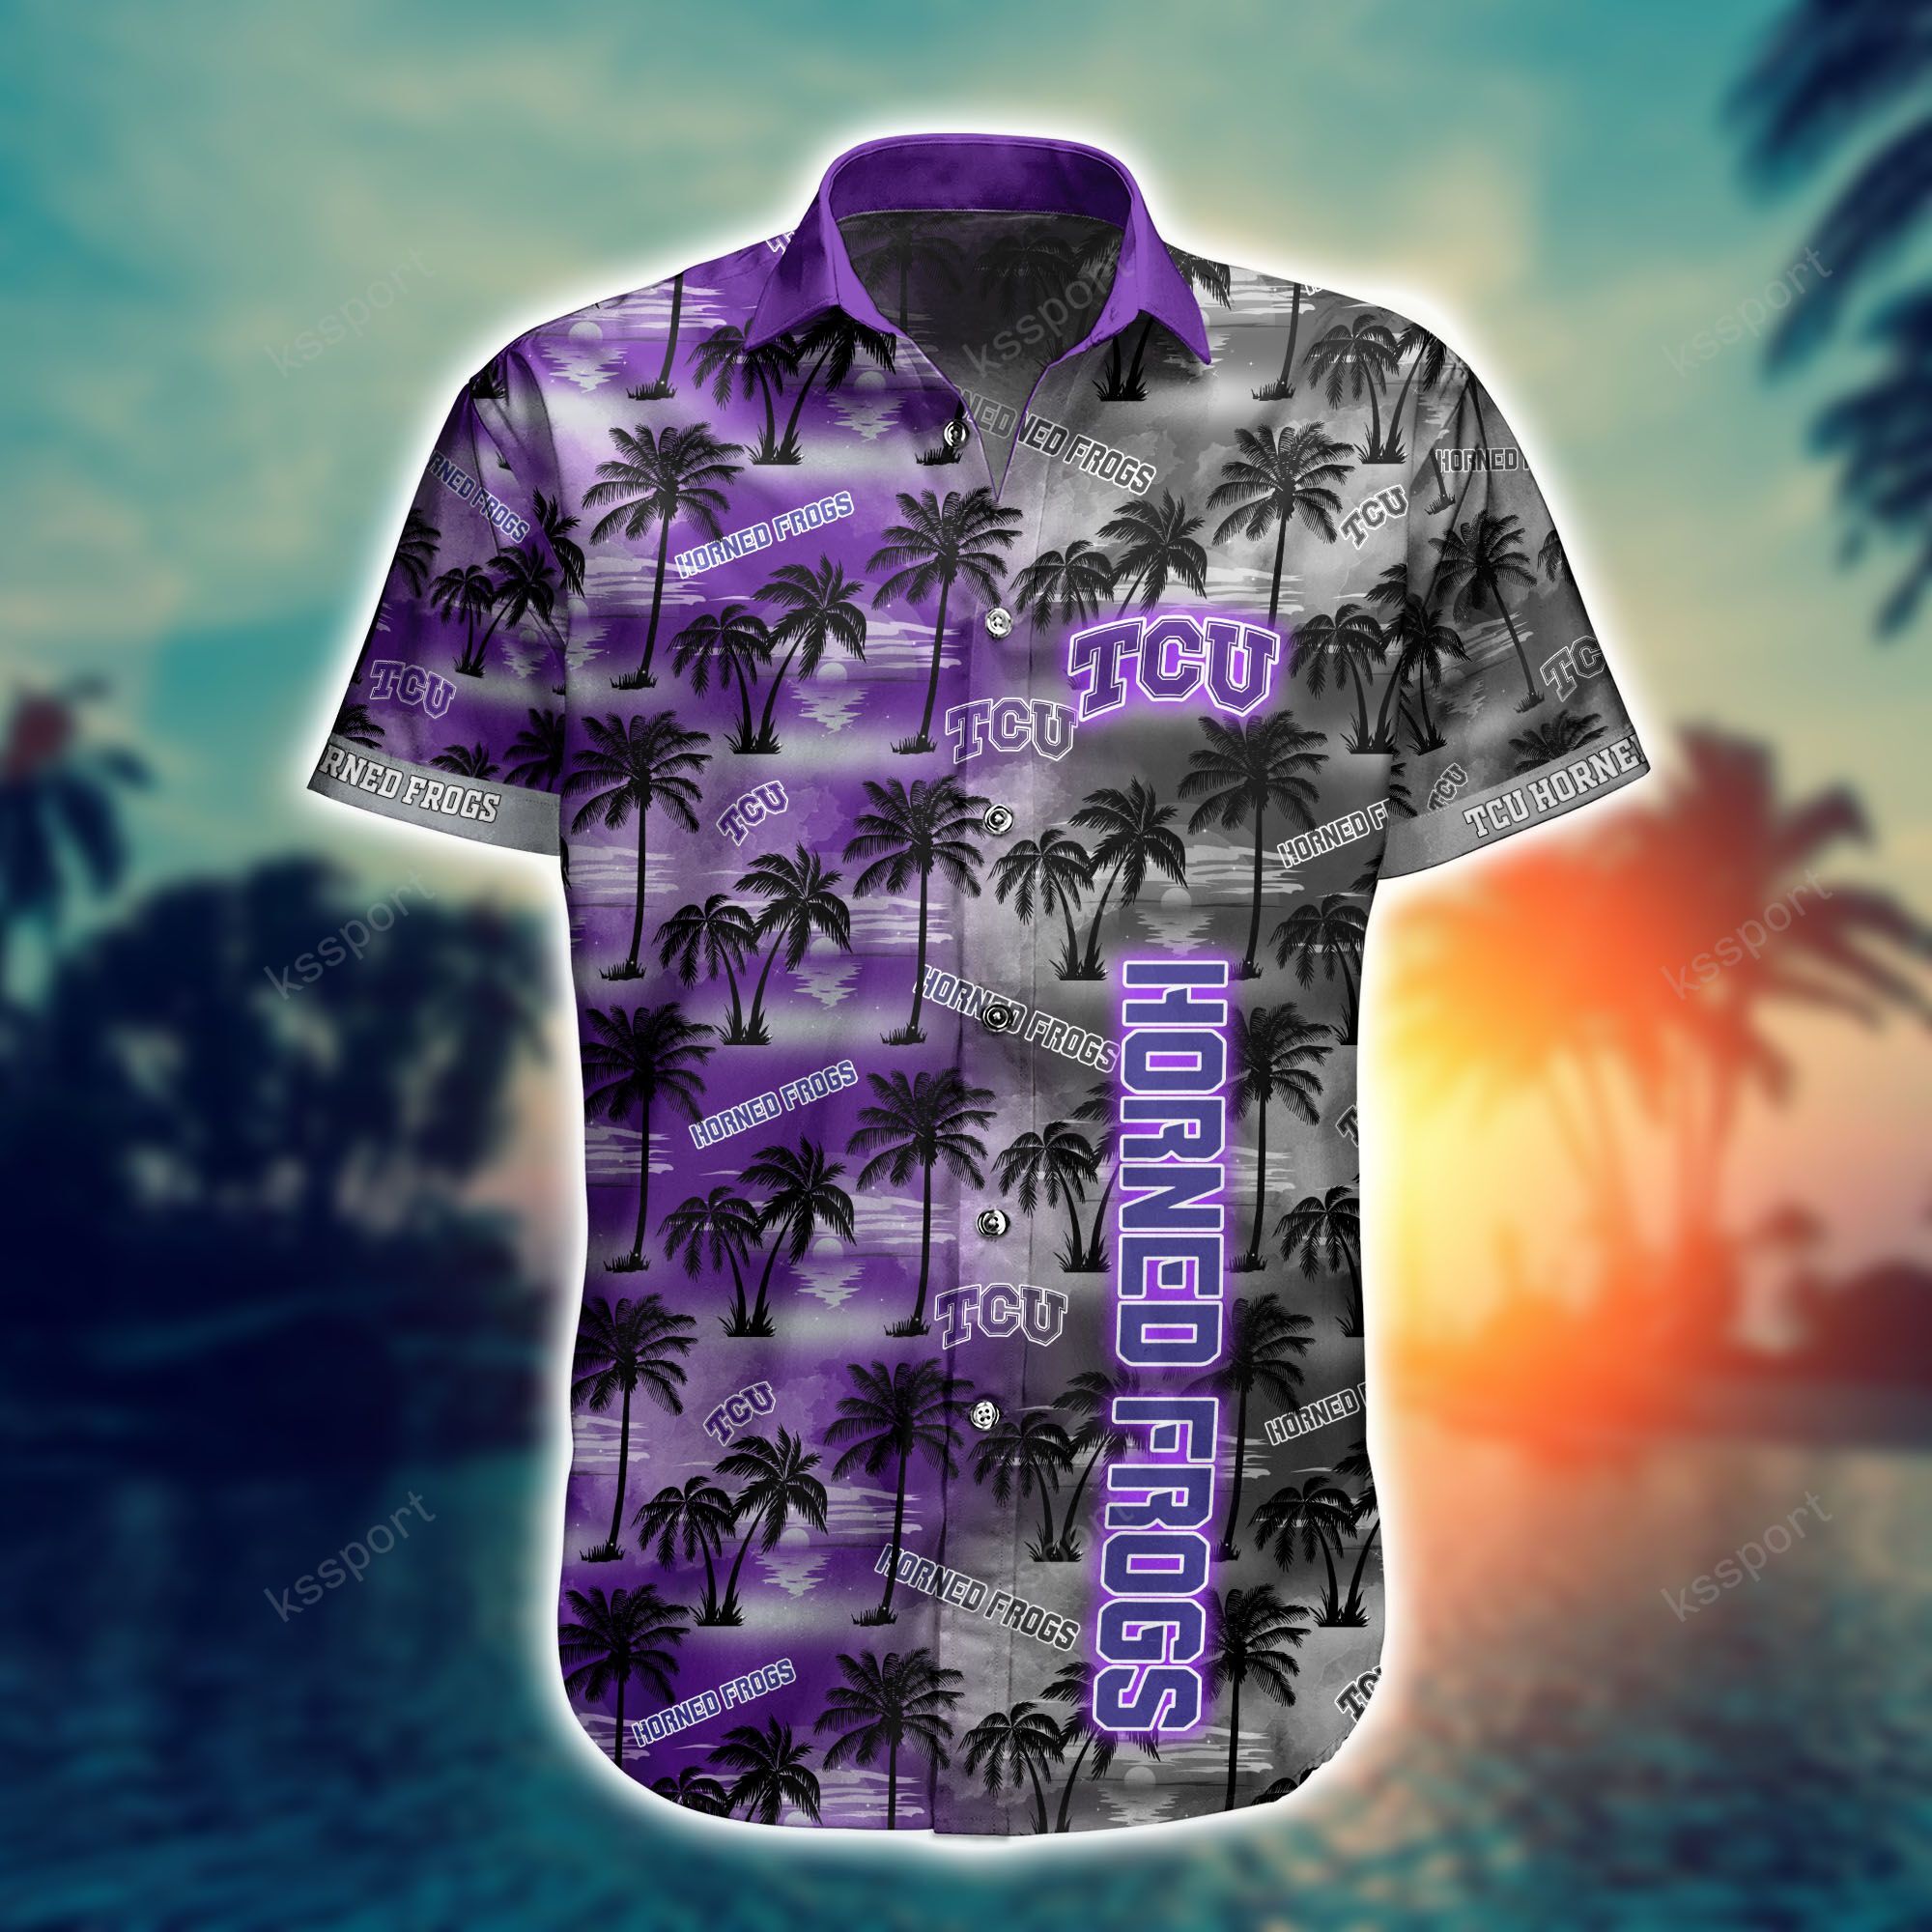 Hawaiian shirt and shorts is a great way to look stylish at a beach party 23